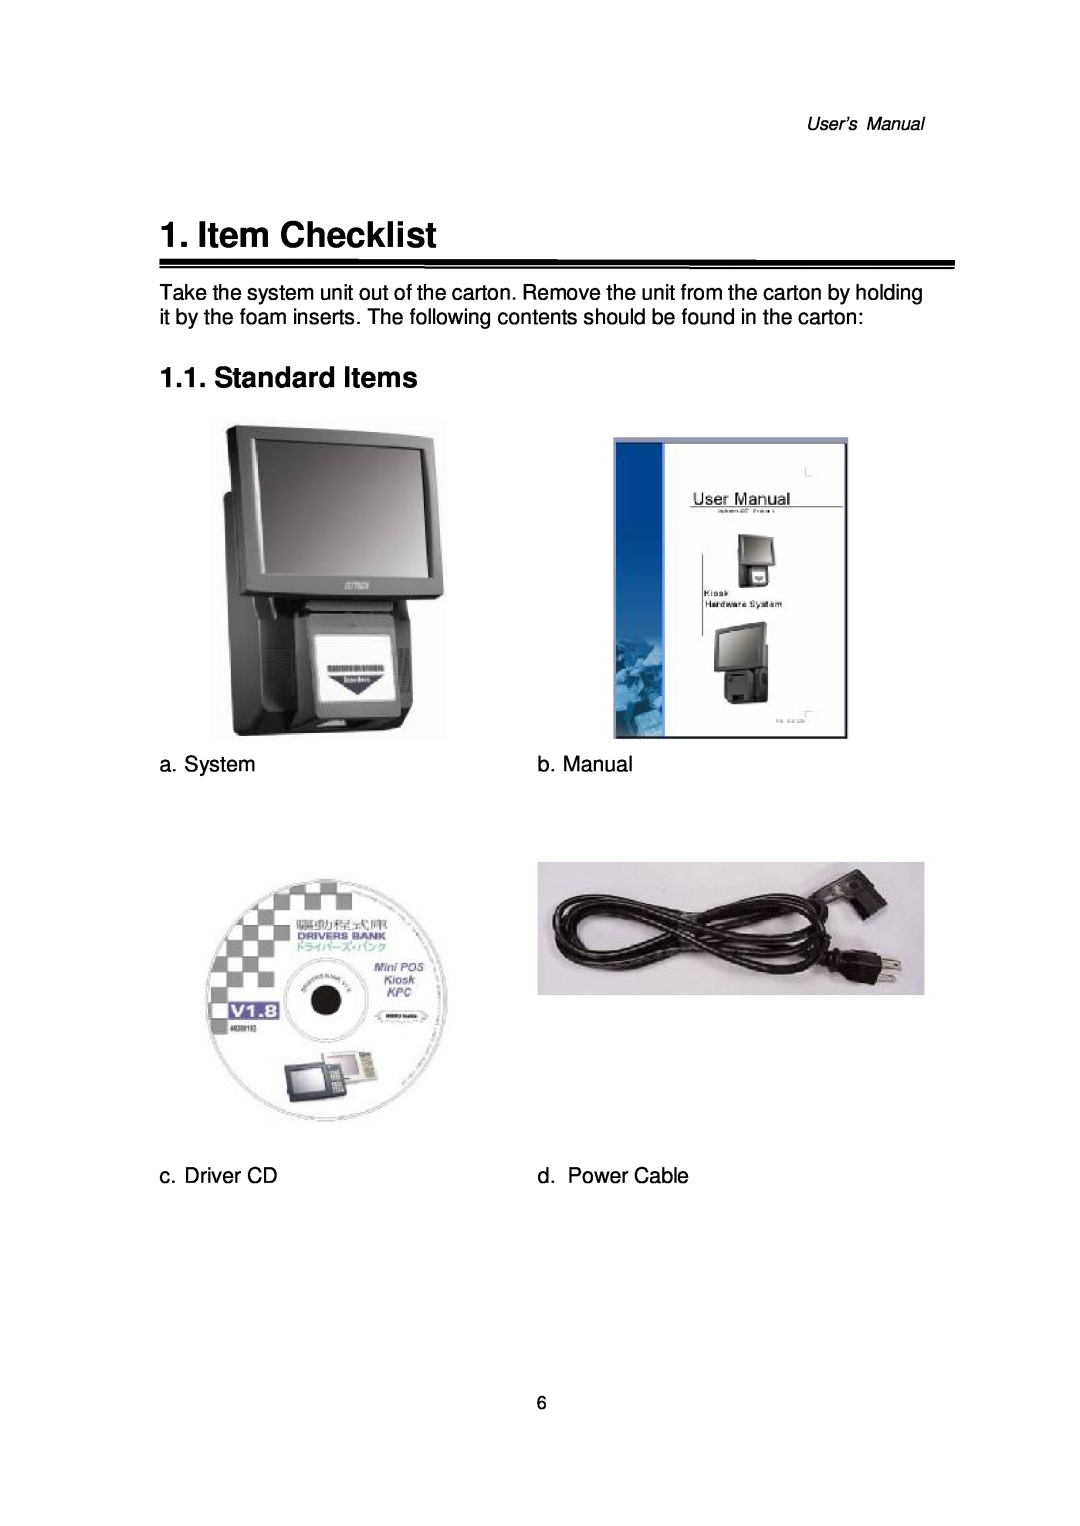 Intel 48201201, Kiosk Hardware System user manual Item Checklist, Standard Items, User’s Manual 